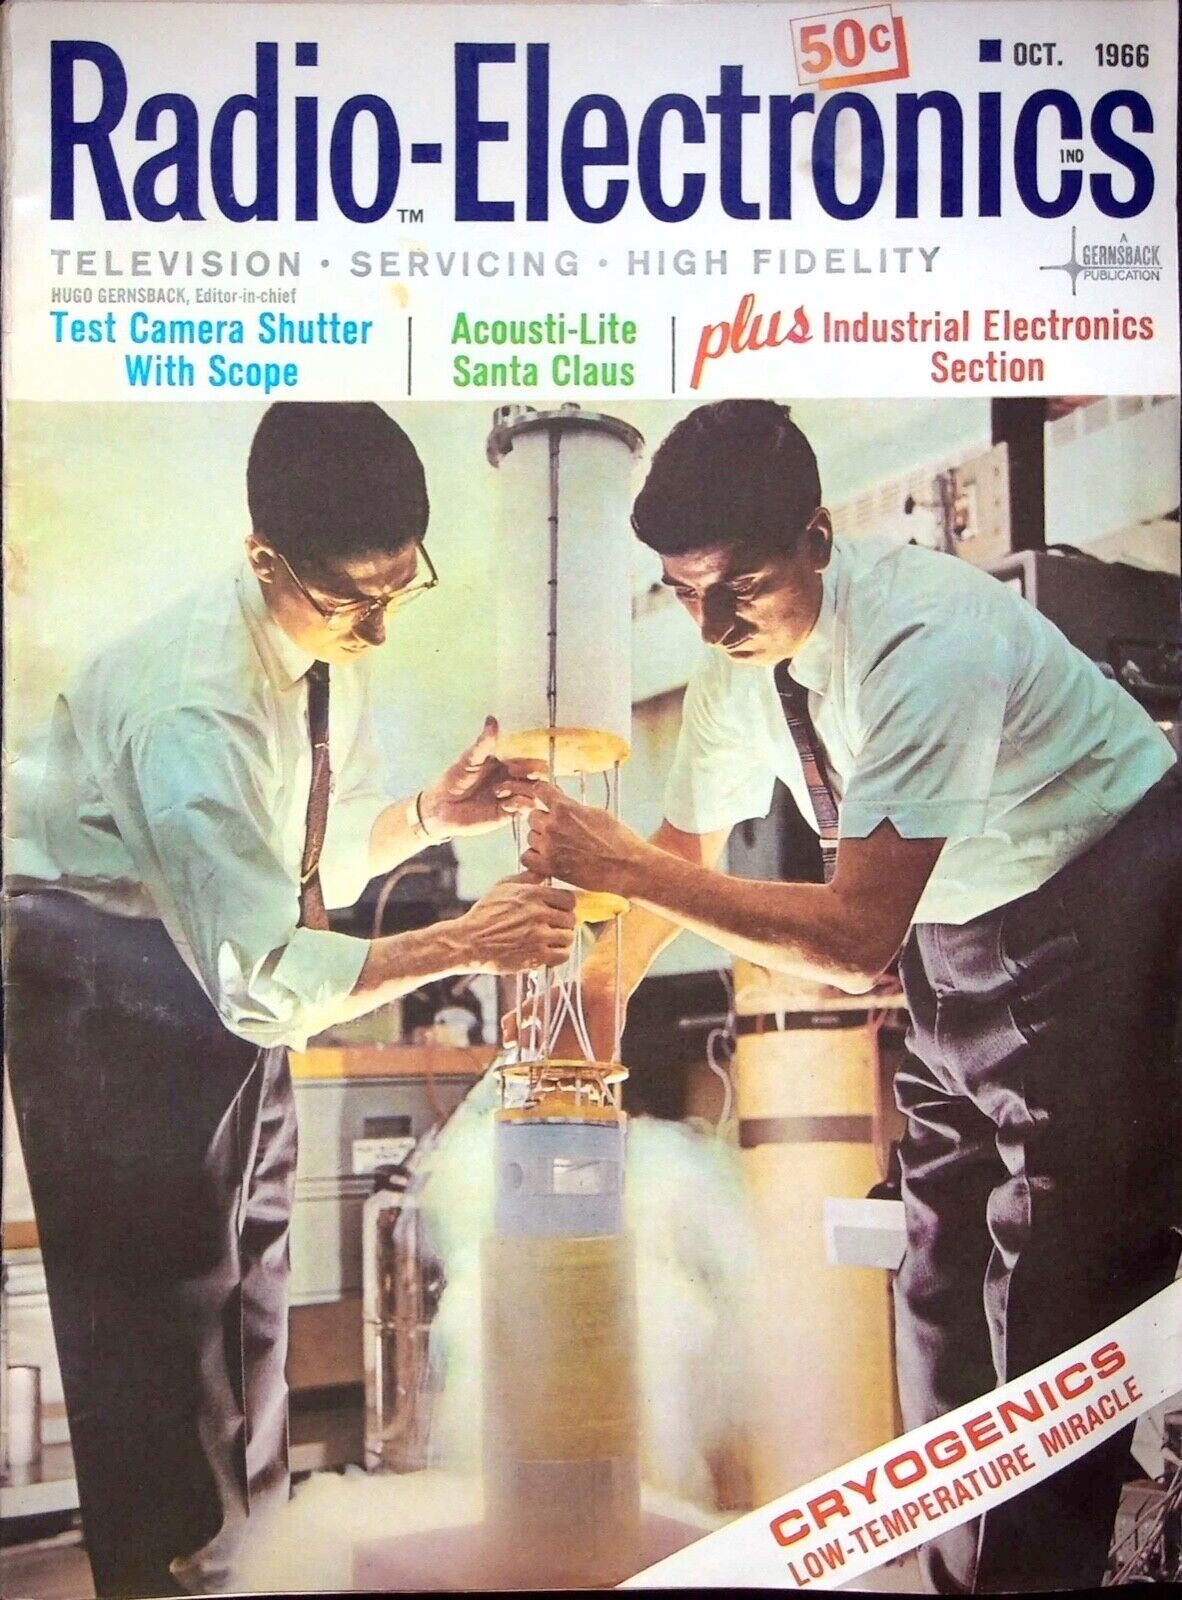 CRYOGENICS LOW-TEMPERATURE MIRACLE - Radio - Electronics Magazine, OCT. 1966